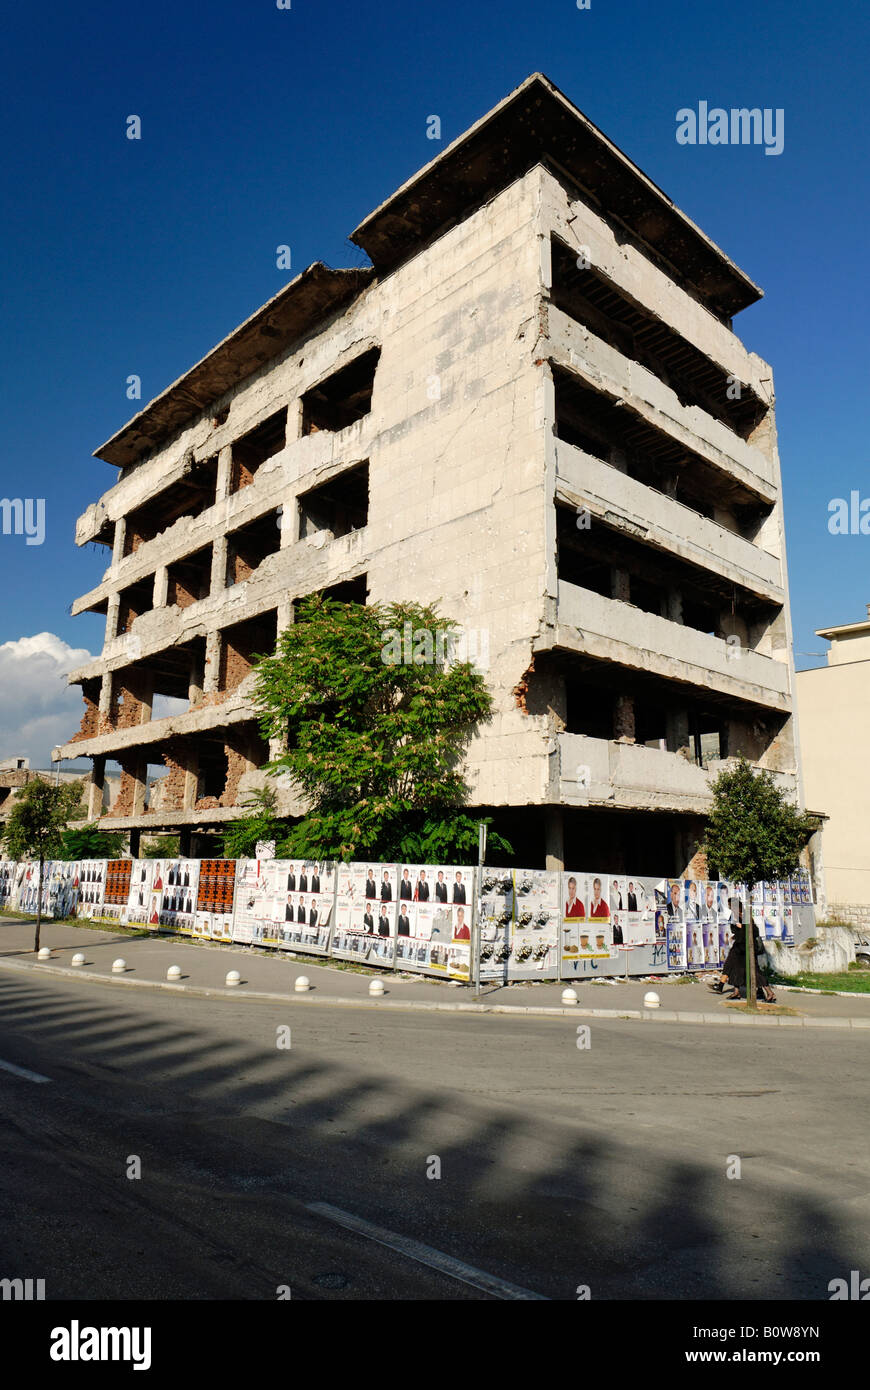 Building destroyed during the civil war, Mostar, Bosnia and Herzegovina, Balkans Stock Photo